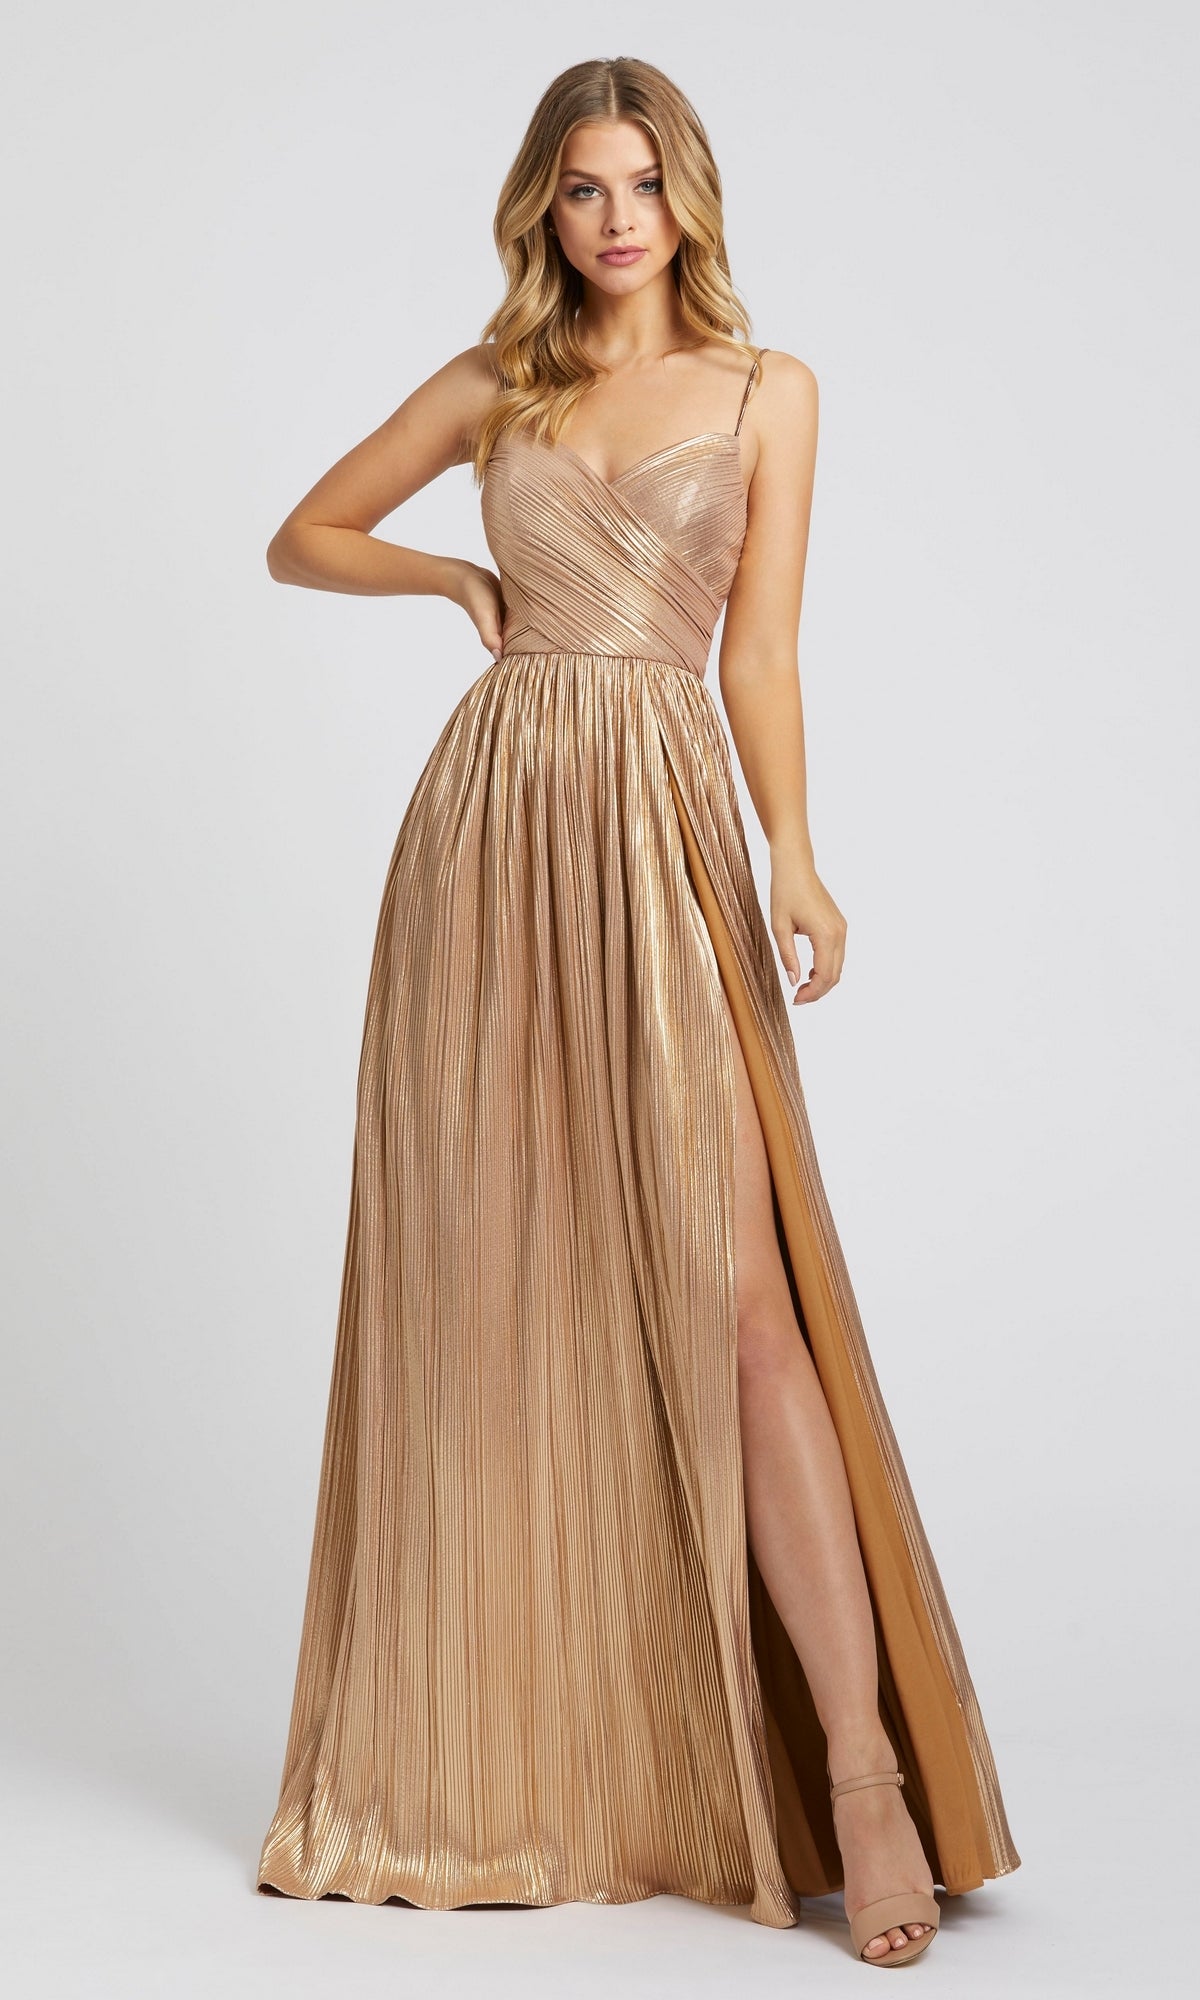 Long Formal Dress 26275 by Mac Duggal